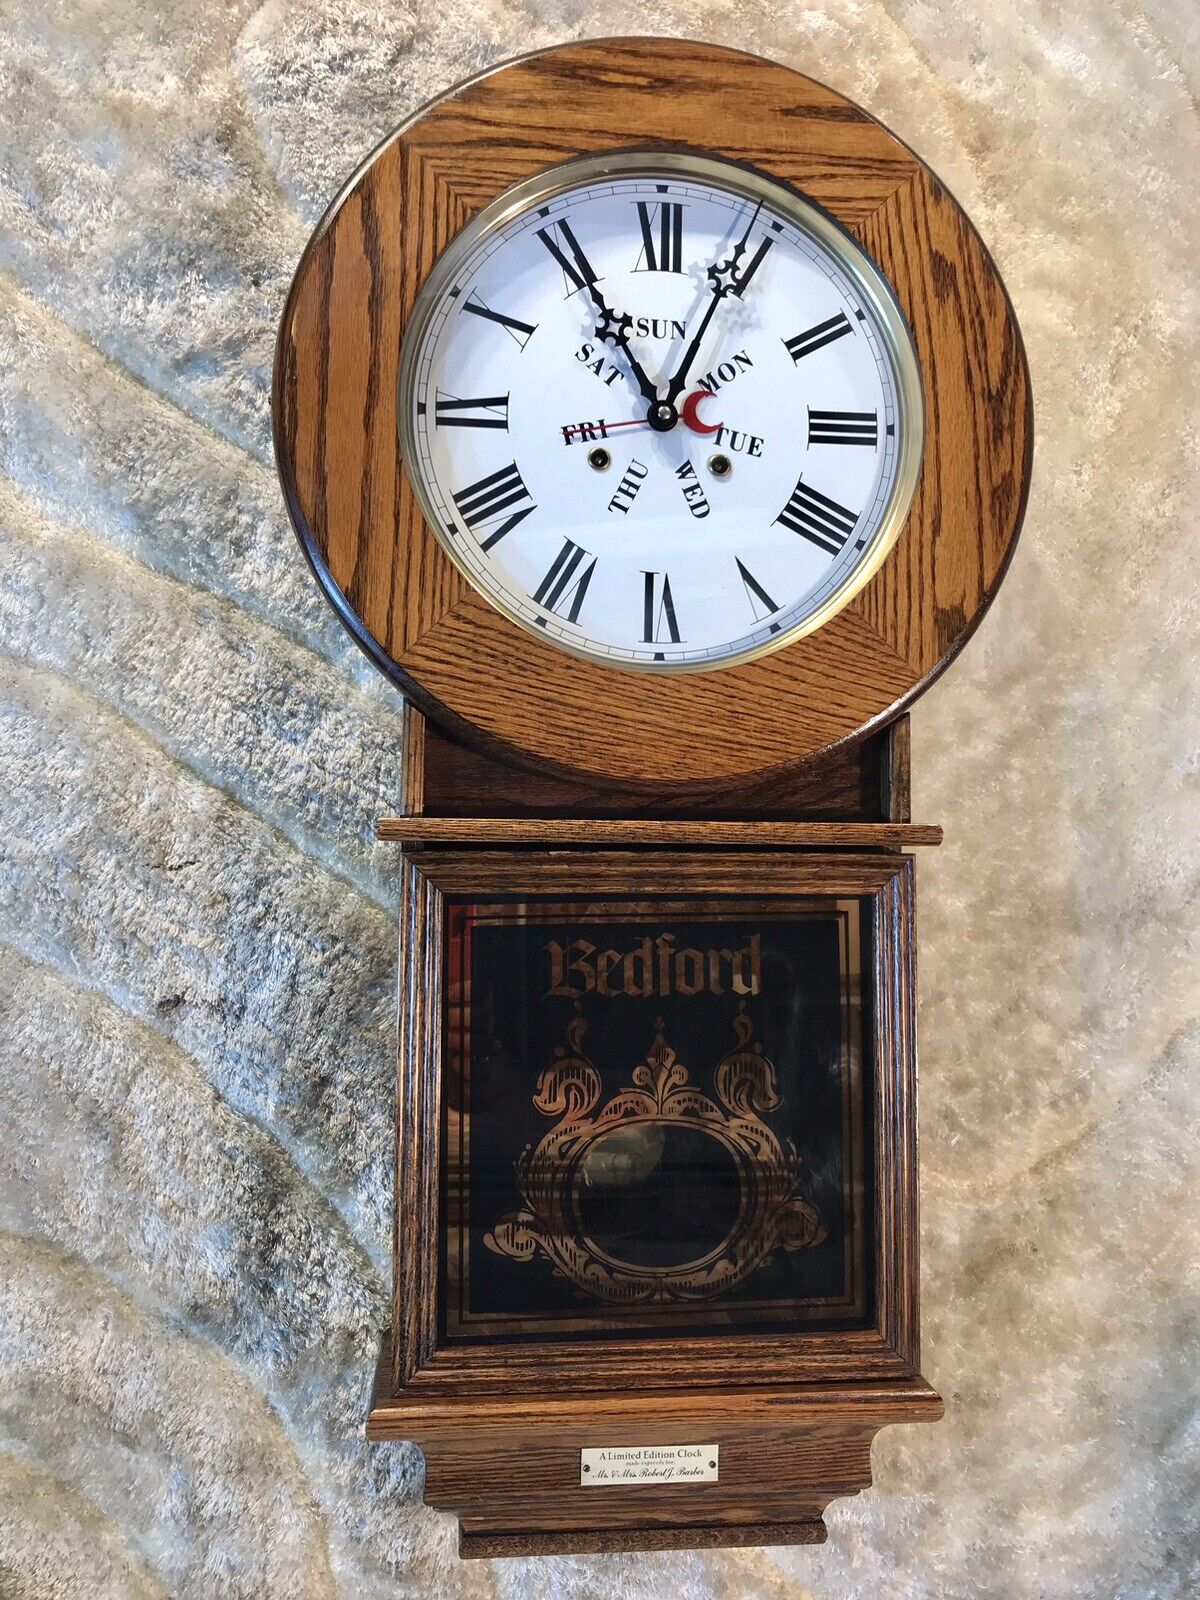 USA Bristol,N,Y Bedford,CALENDAR,time & Strike,Clock,23-Kart Gold